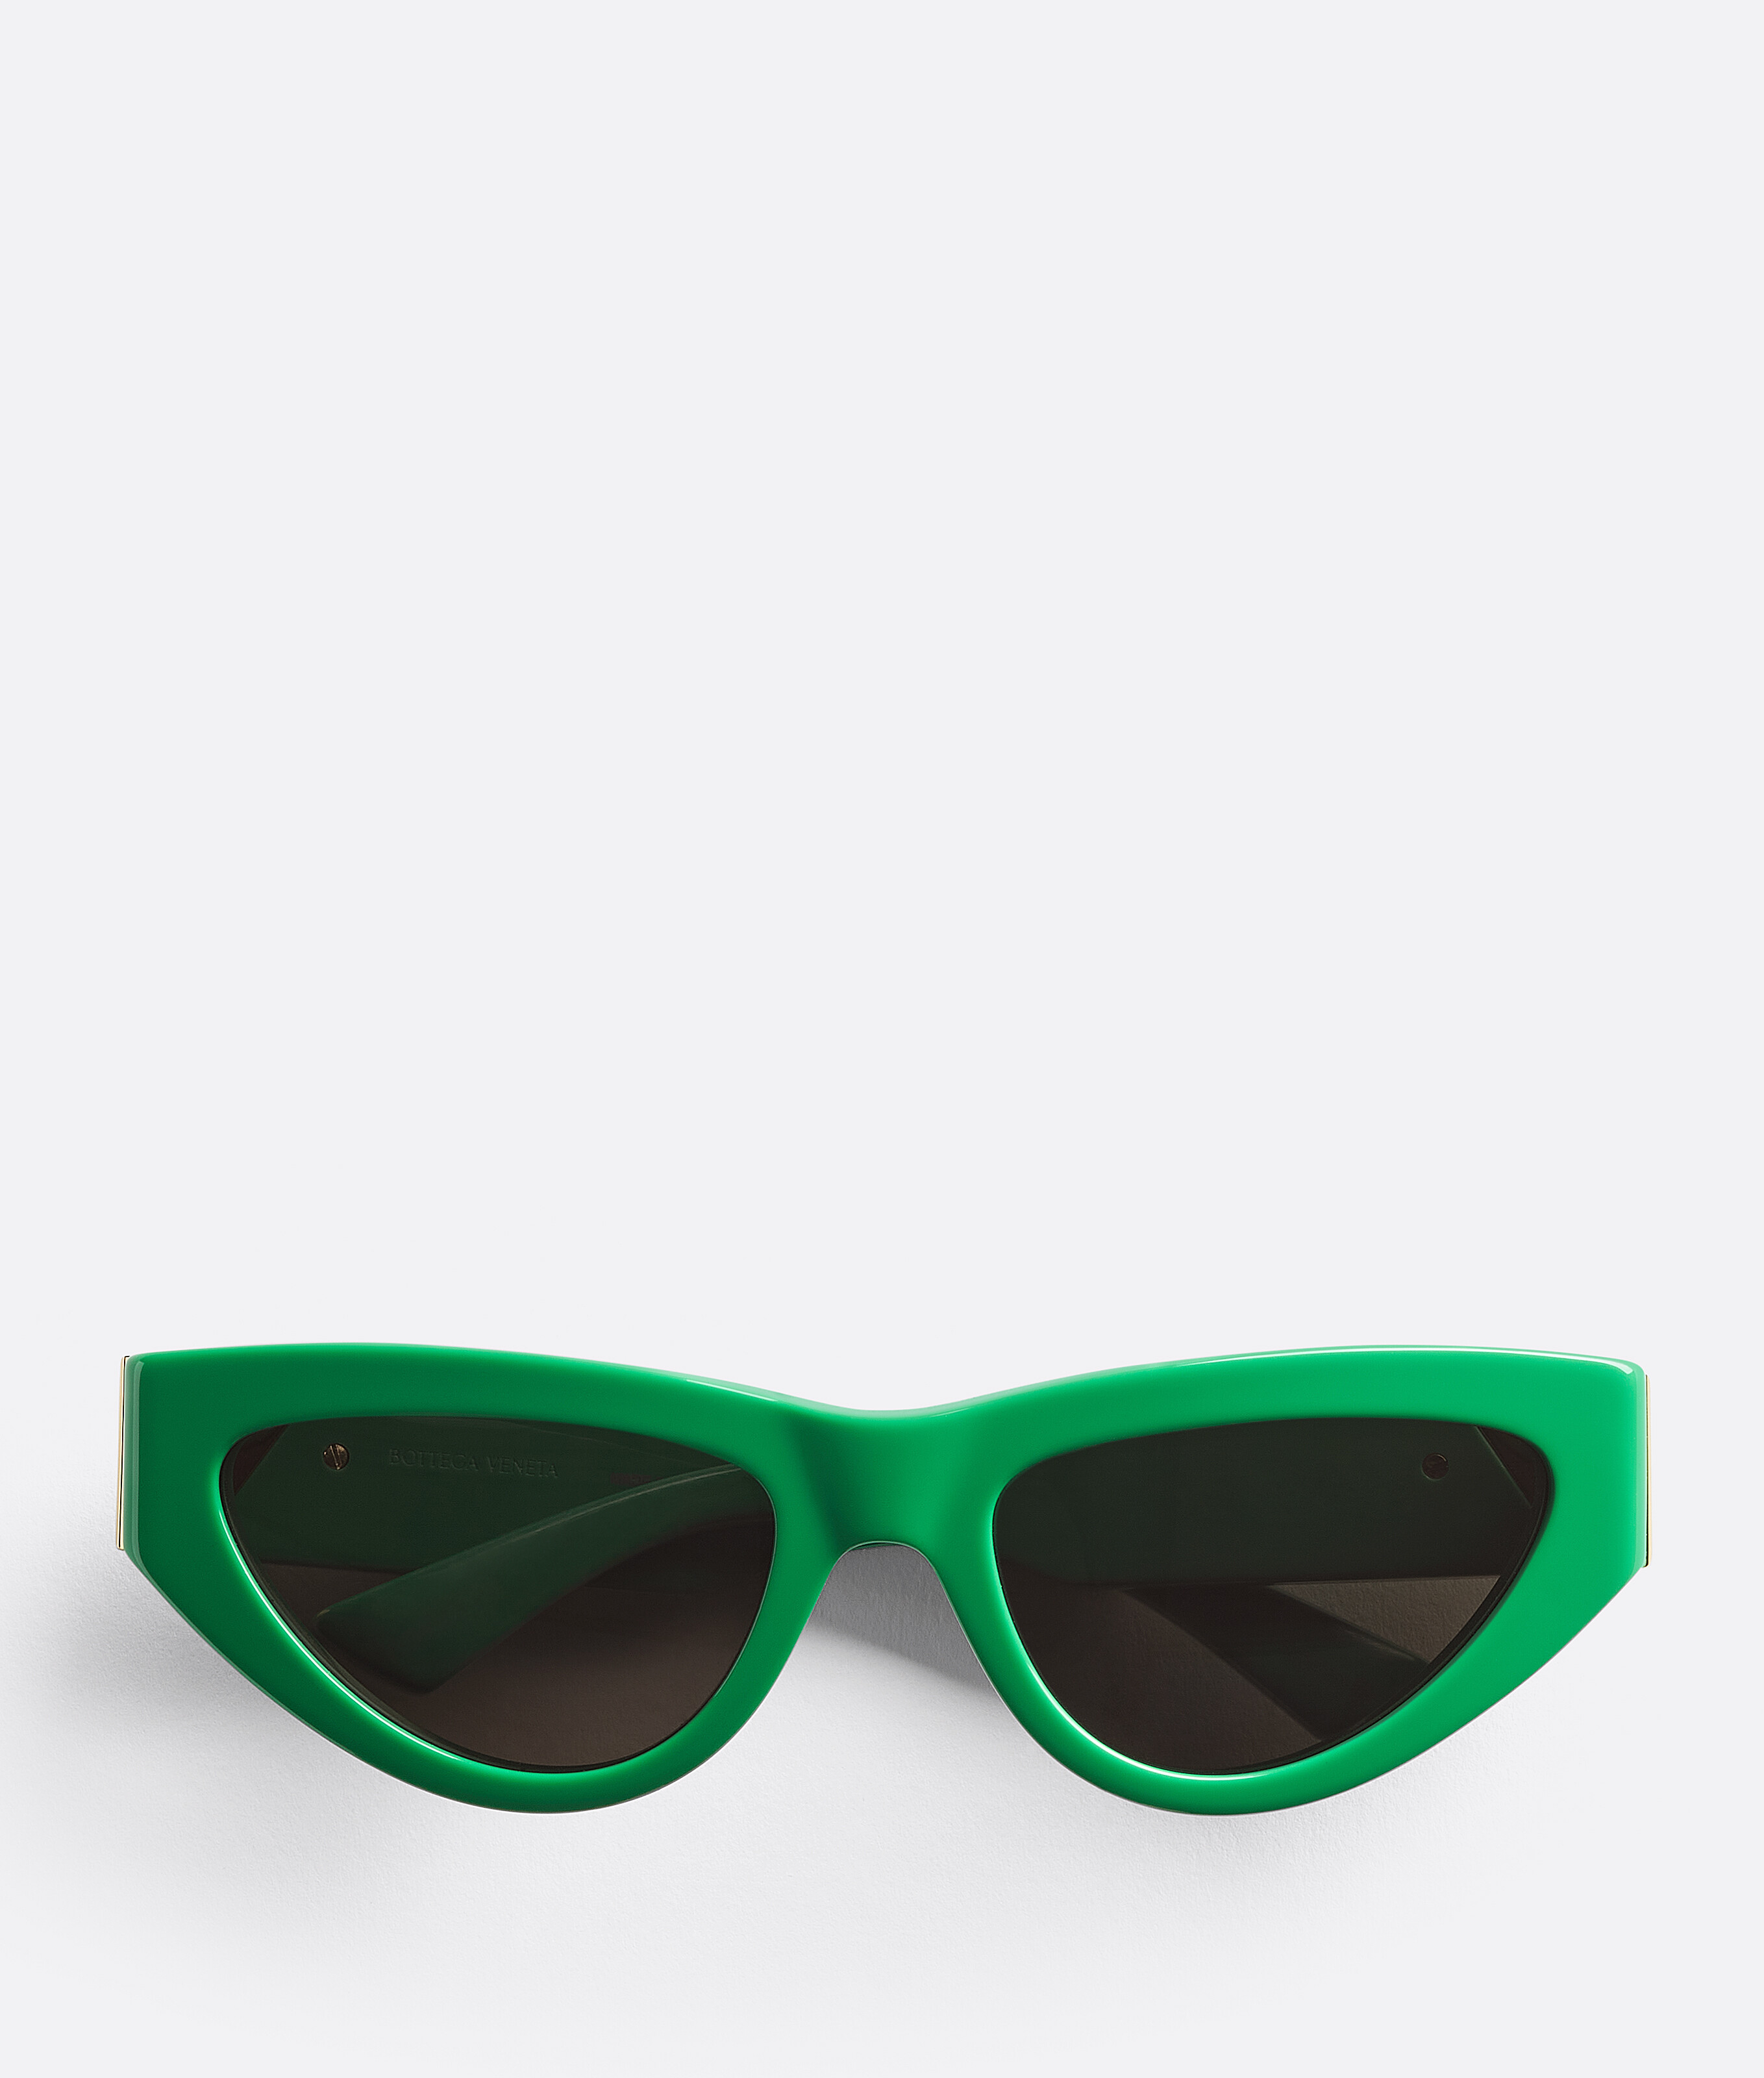 Bottega Veneta® Women's Angle Cat-Eye Sunglasses in Green. Shop online now.